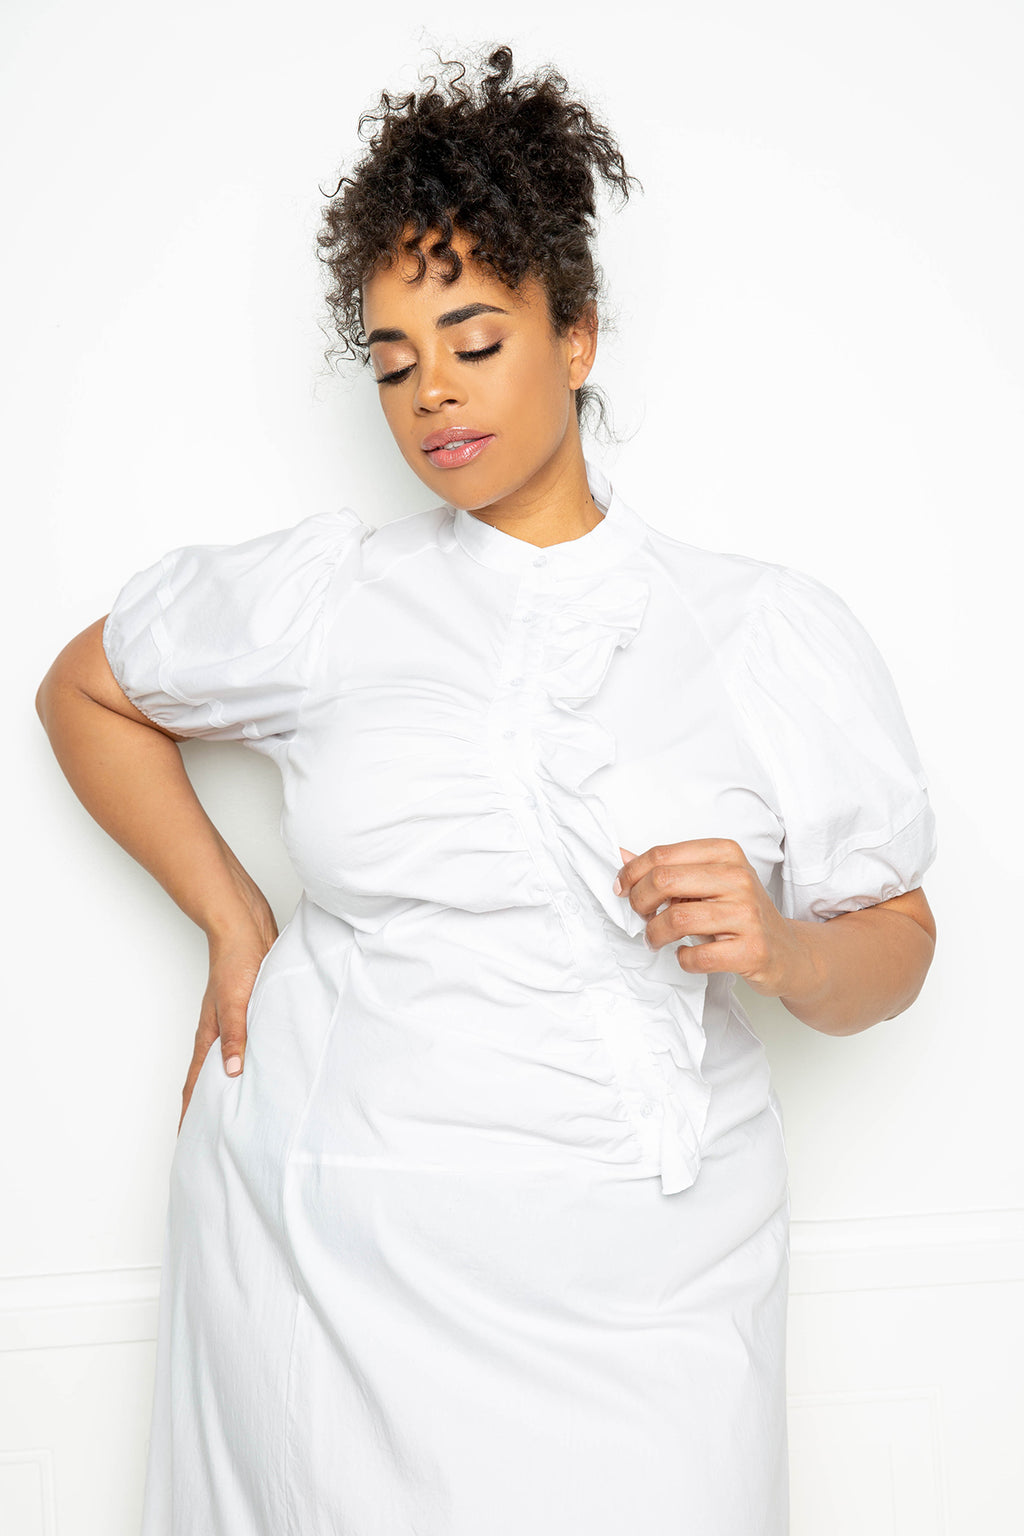 Stripe Asymmetrical Sleeve Shirt Dress with Cinched Waist – Buxom